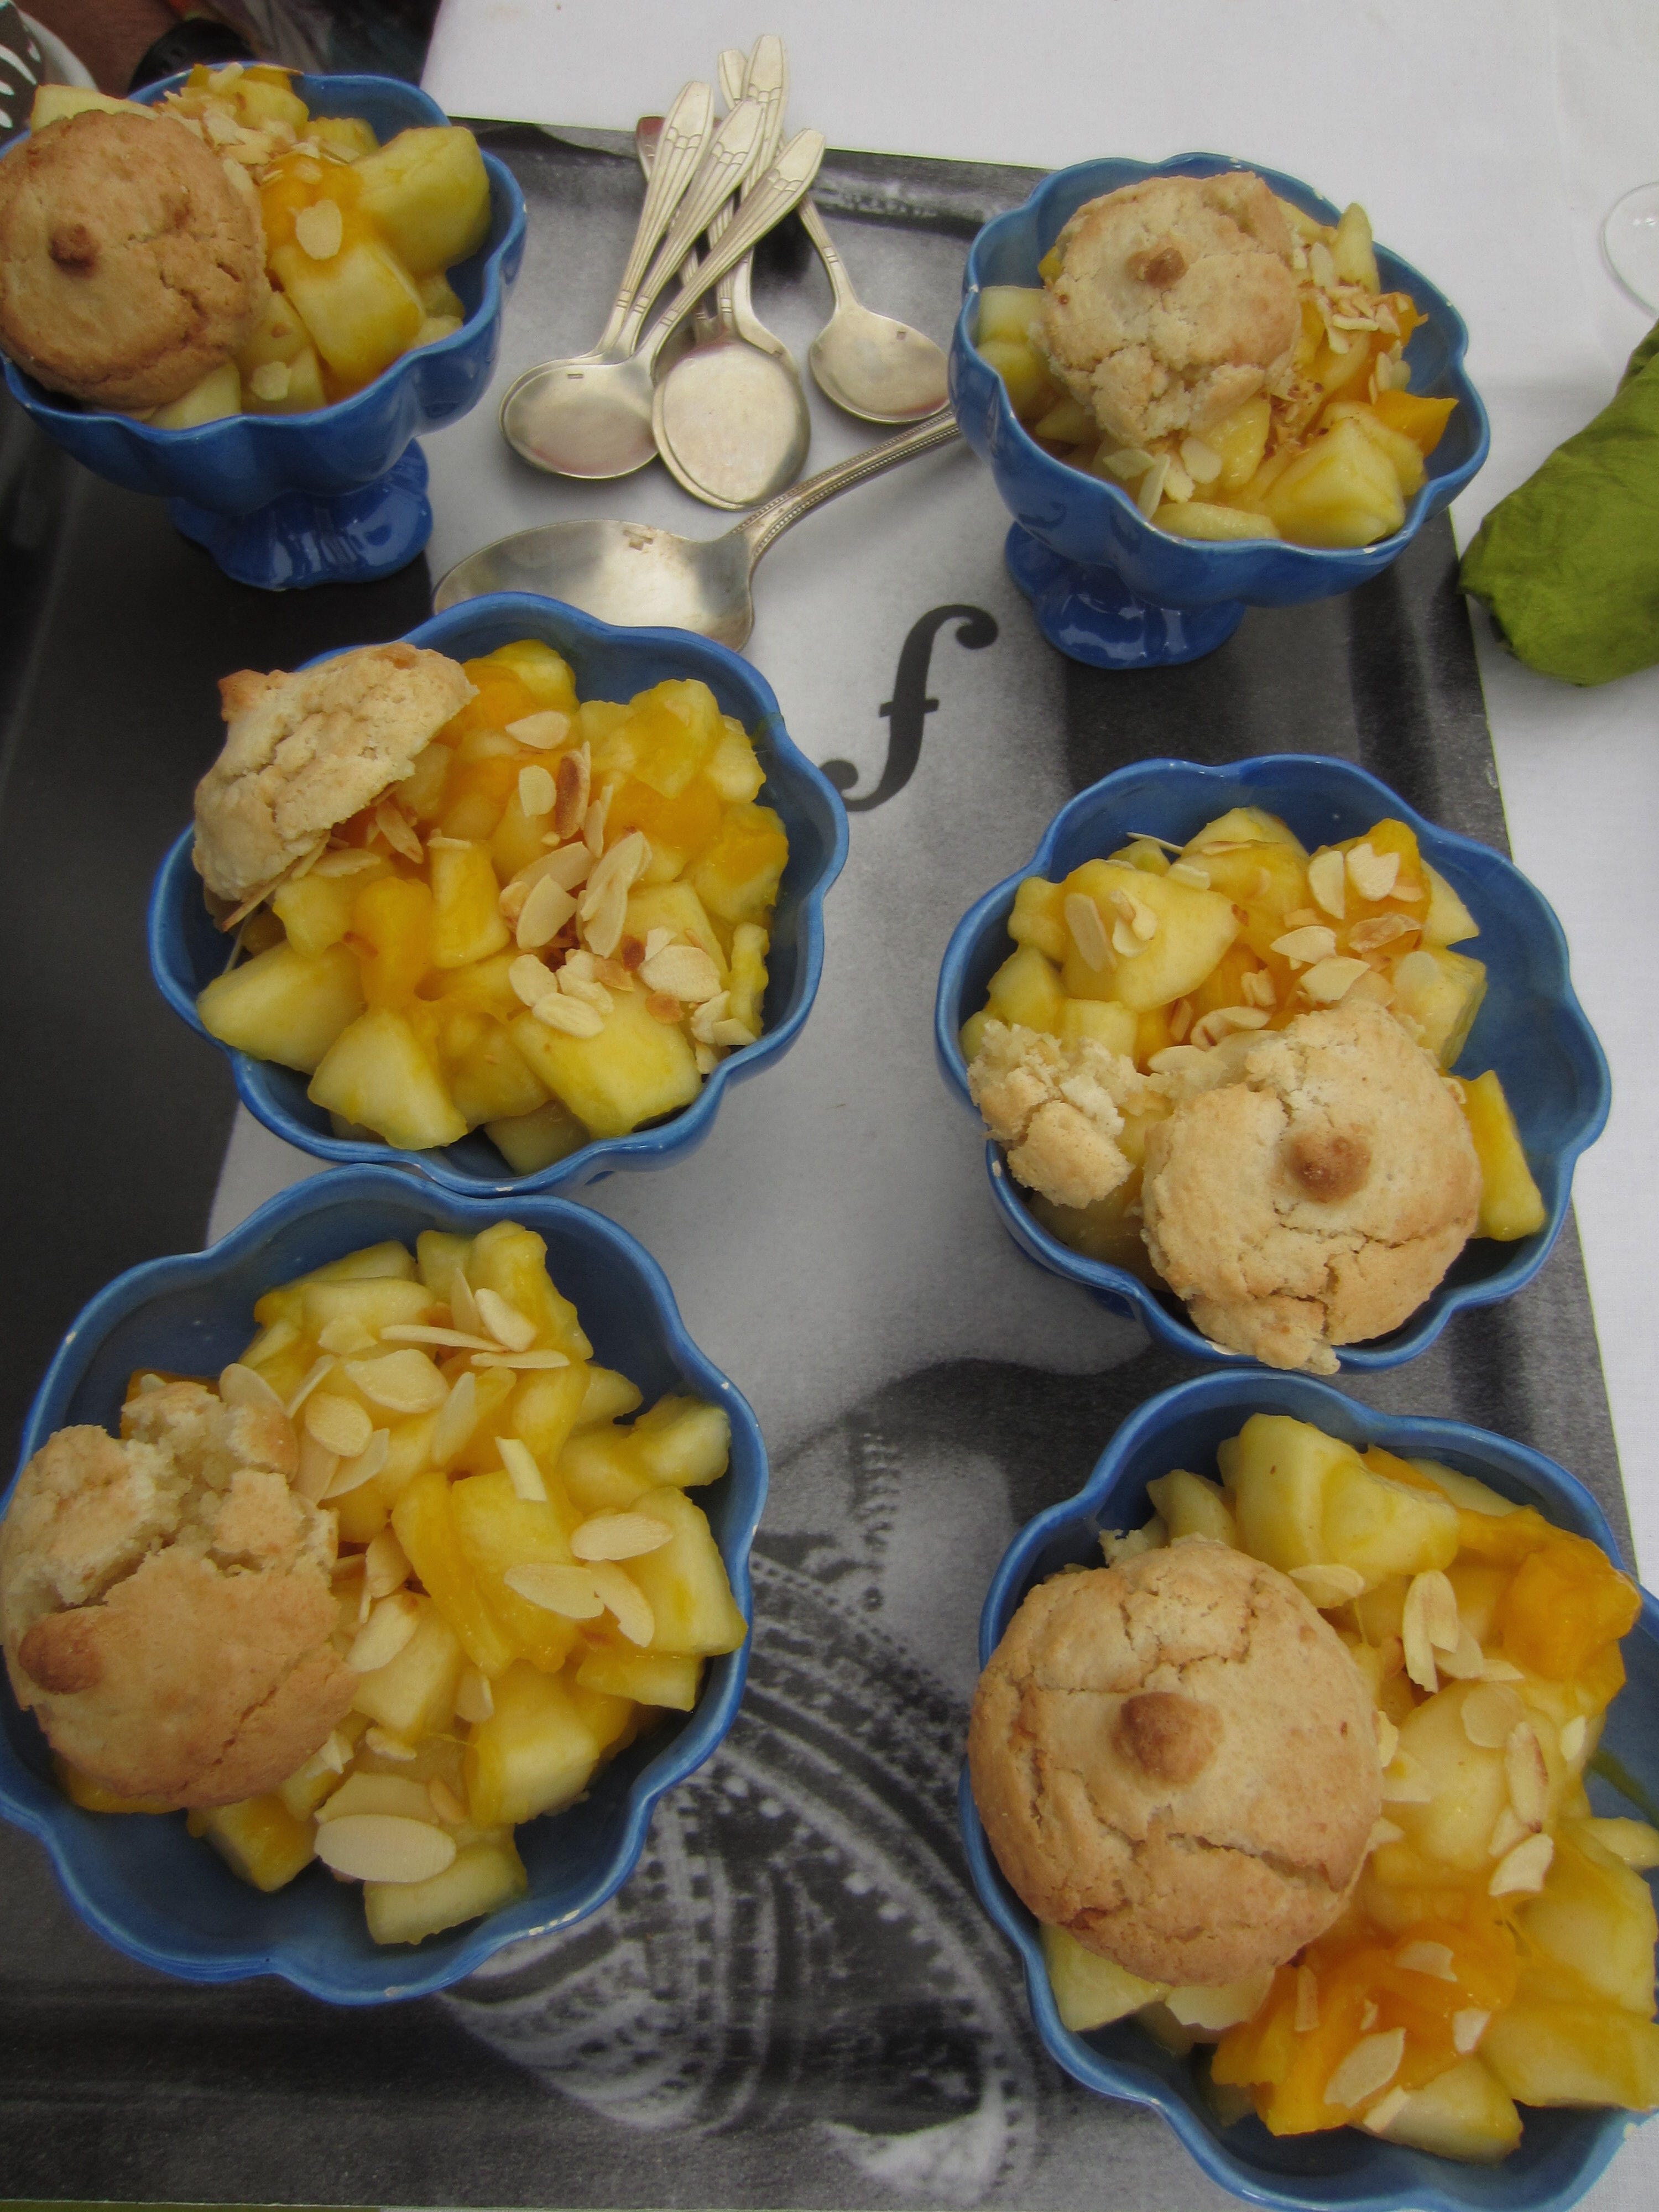 Fruit Desserts almonds @ProvenceCook